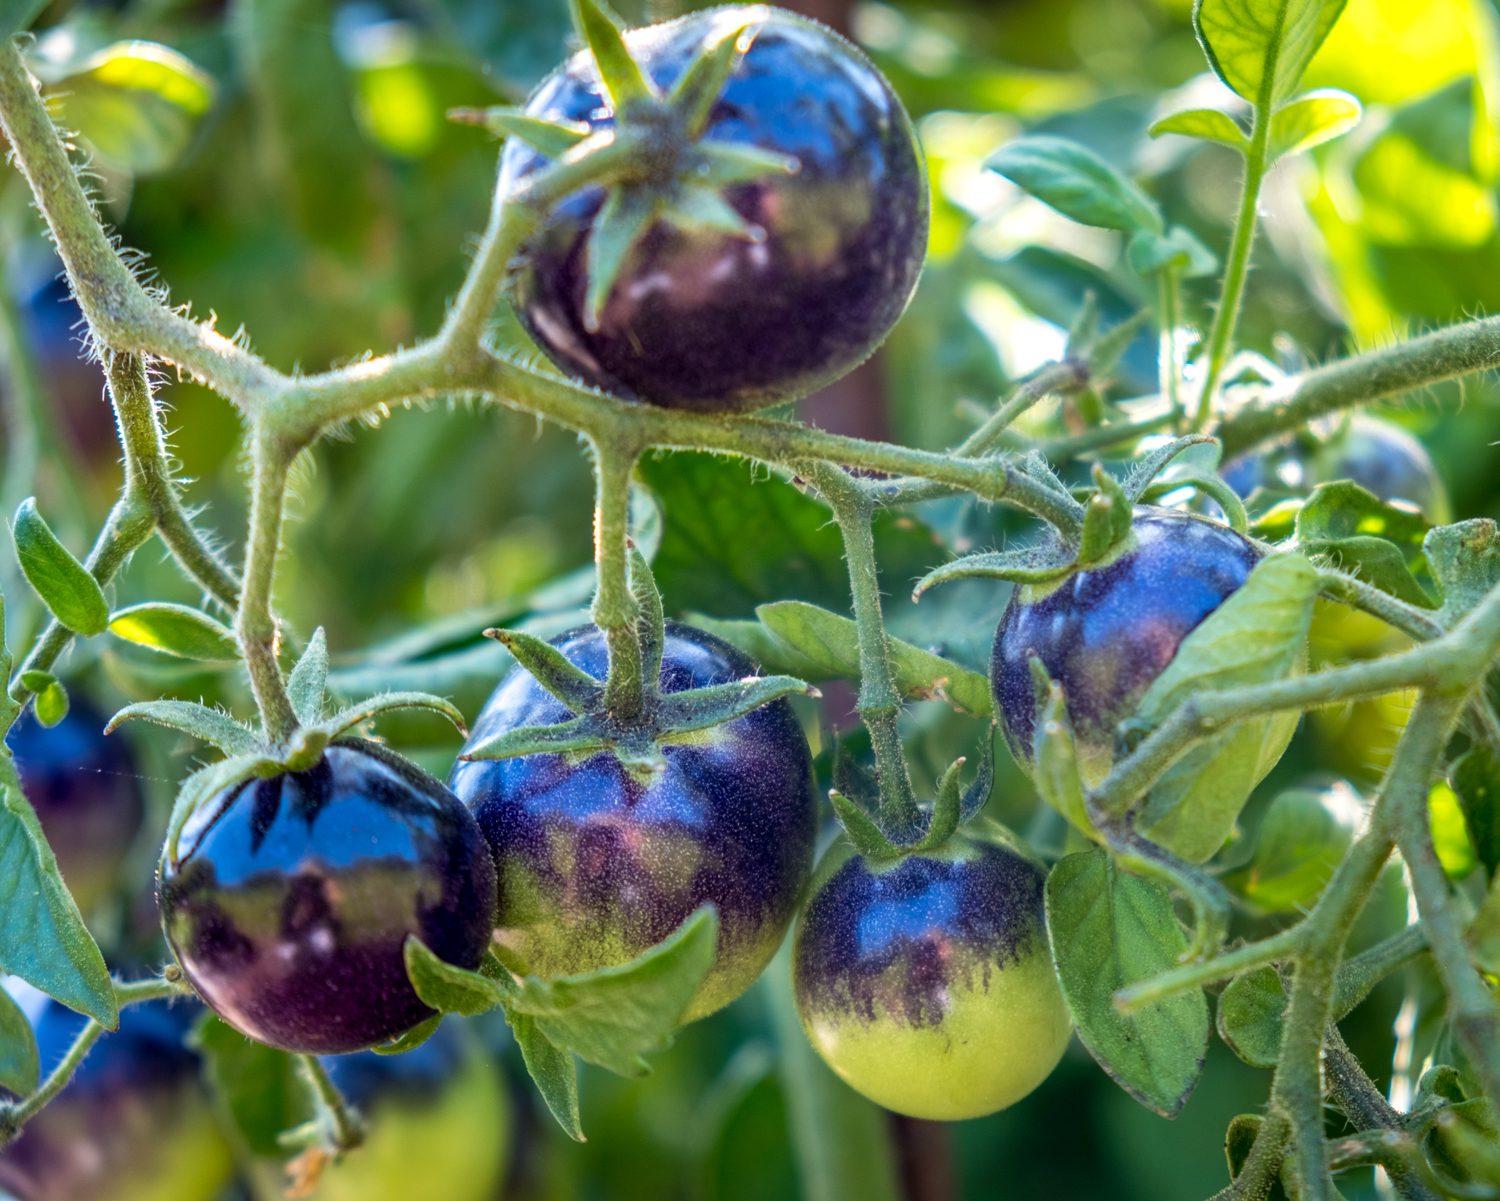 Purple tomato debuts as 'Indigo Rose' - The Blissful Gardeners